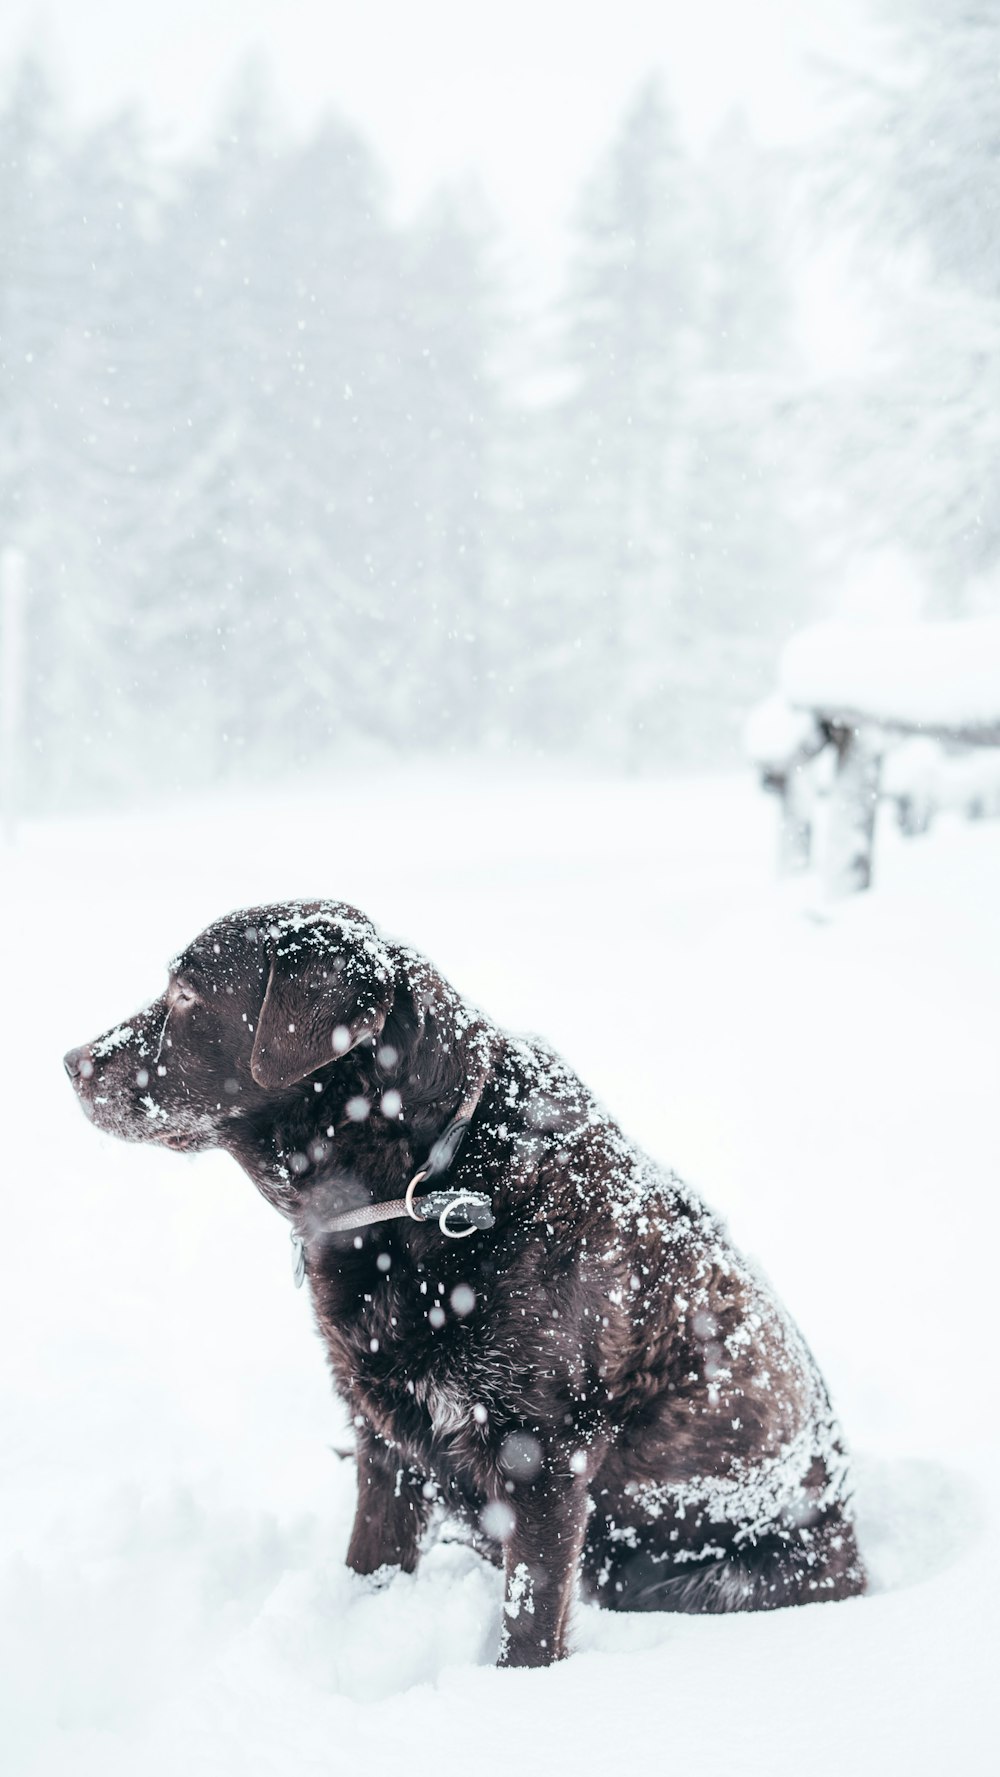 Labrador retriever chocolate adulto sentado afuera con nieve